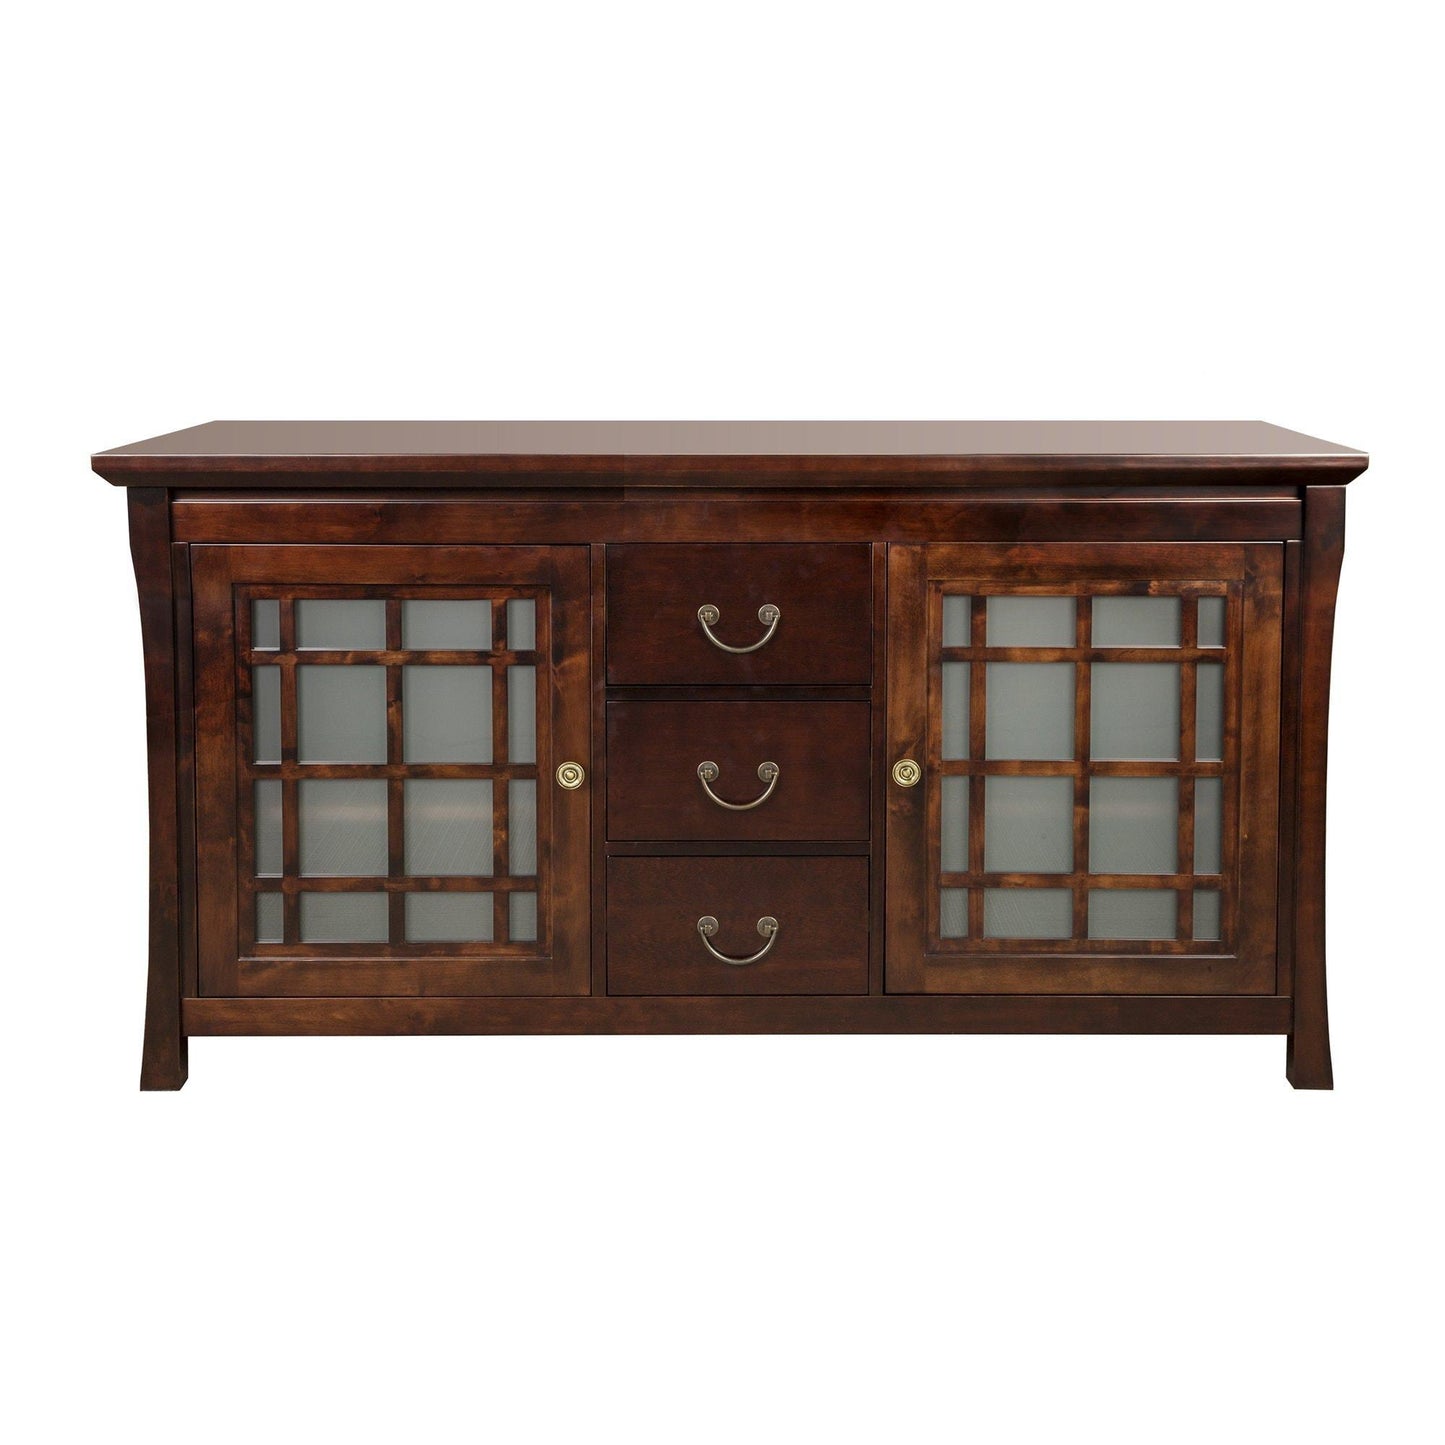 Storage organizer ronbow shoji 60 inch living room bathroom furniture in vintage walnut wood cabinet with three drawers wood countertop 040460 d f07_kit_1